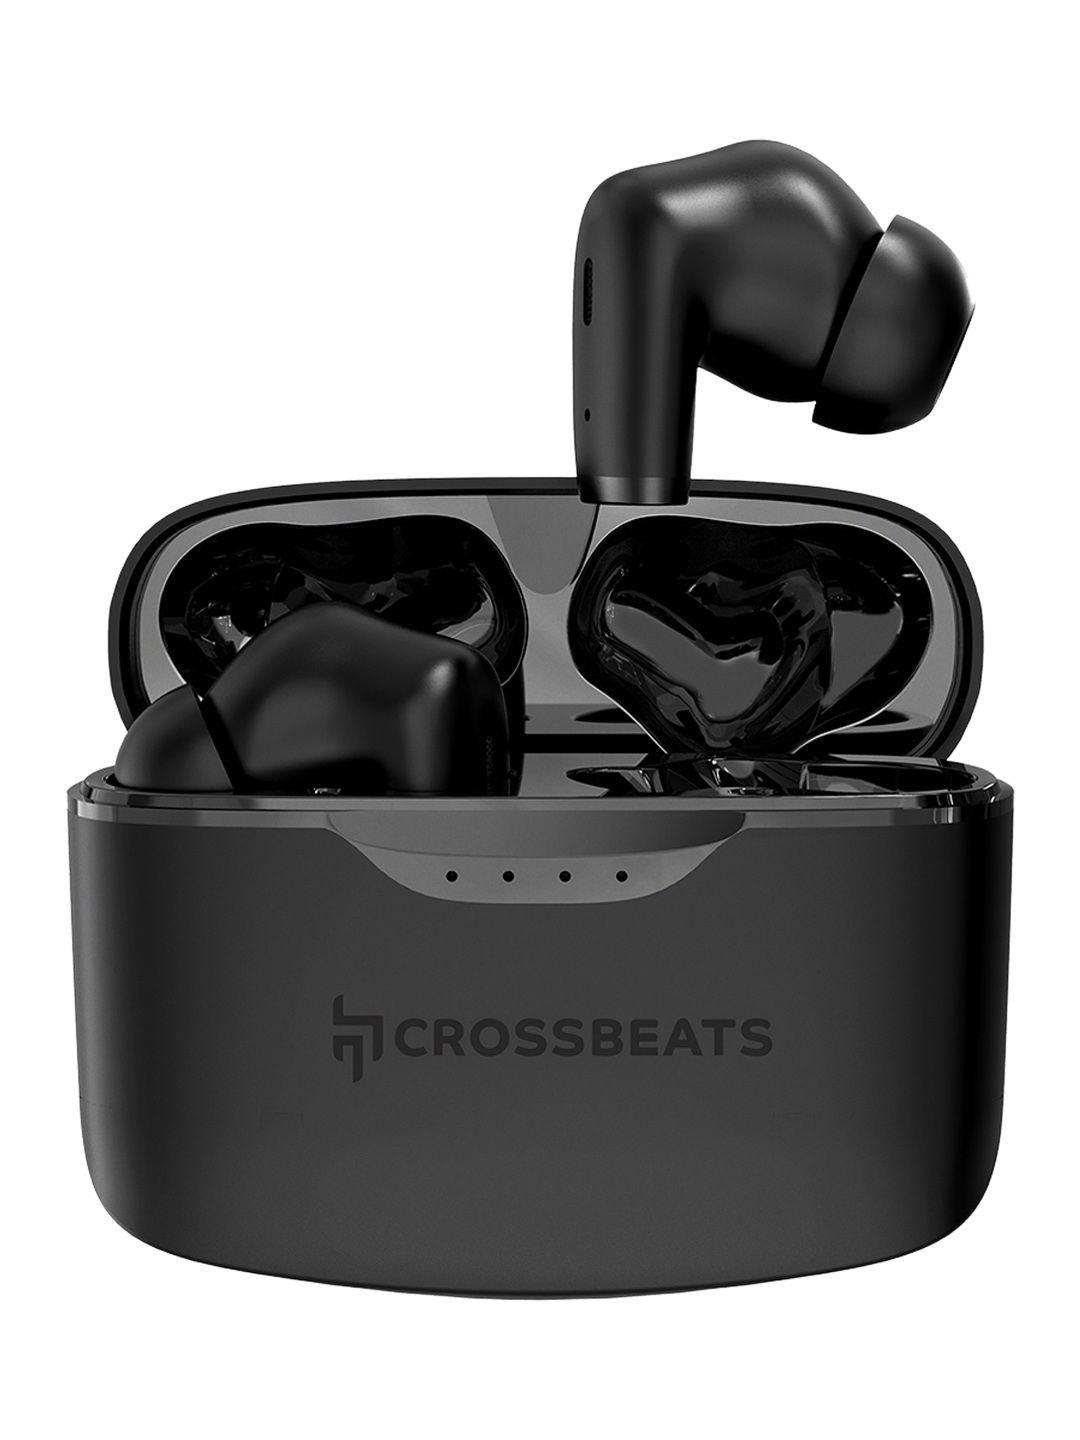 crossbeats black 60hours playtime 13mm driver4 enc mics bluetooth opera earbuds